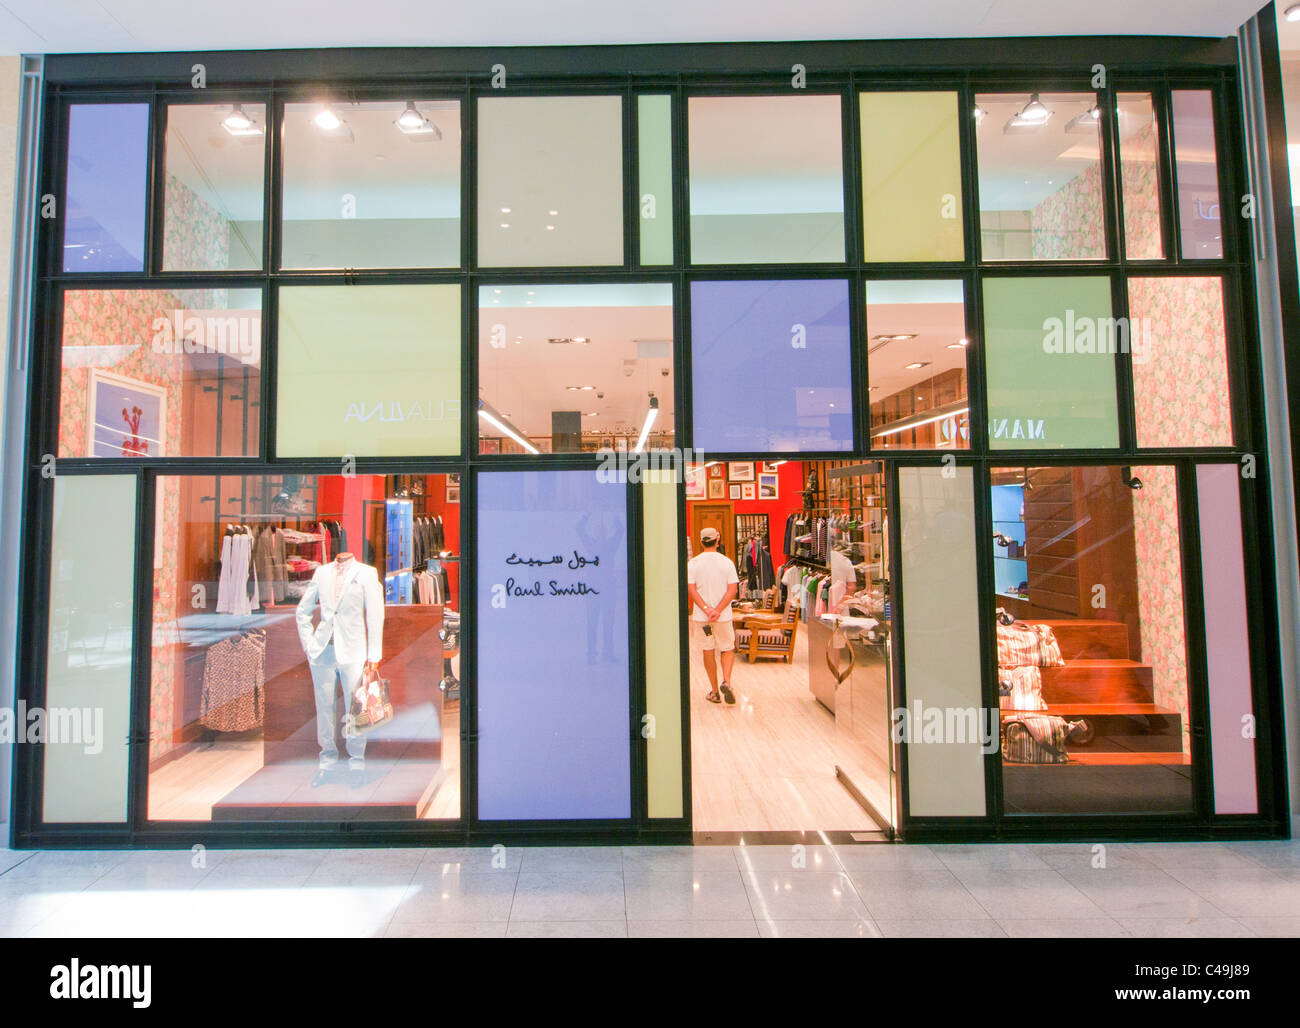 Paul Smith store inside Dubai Mall in UAE Stock Photo